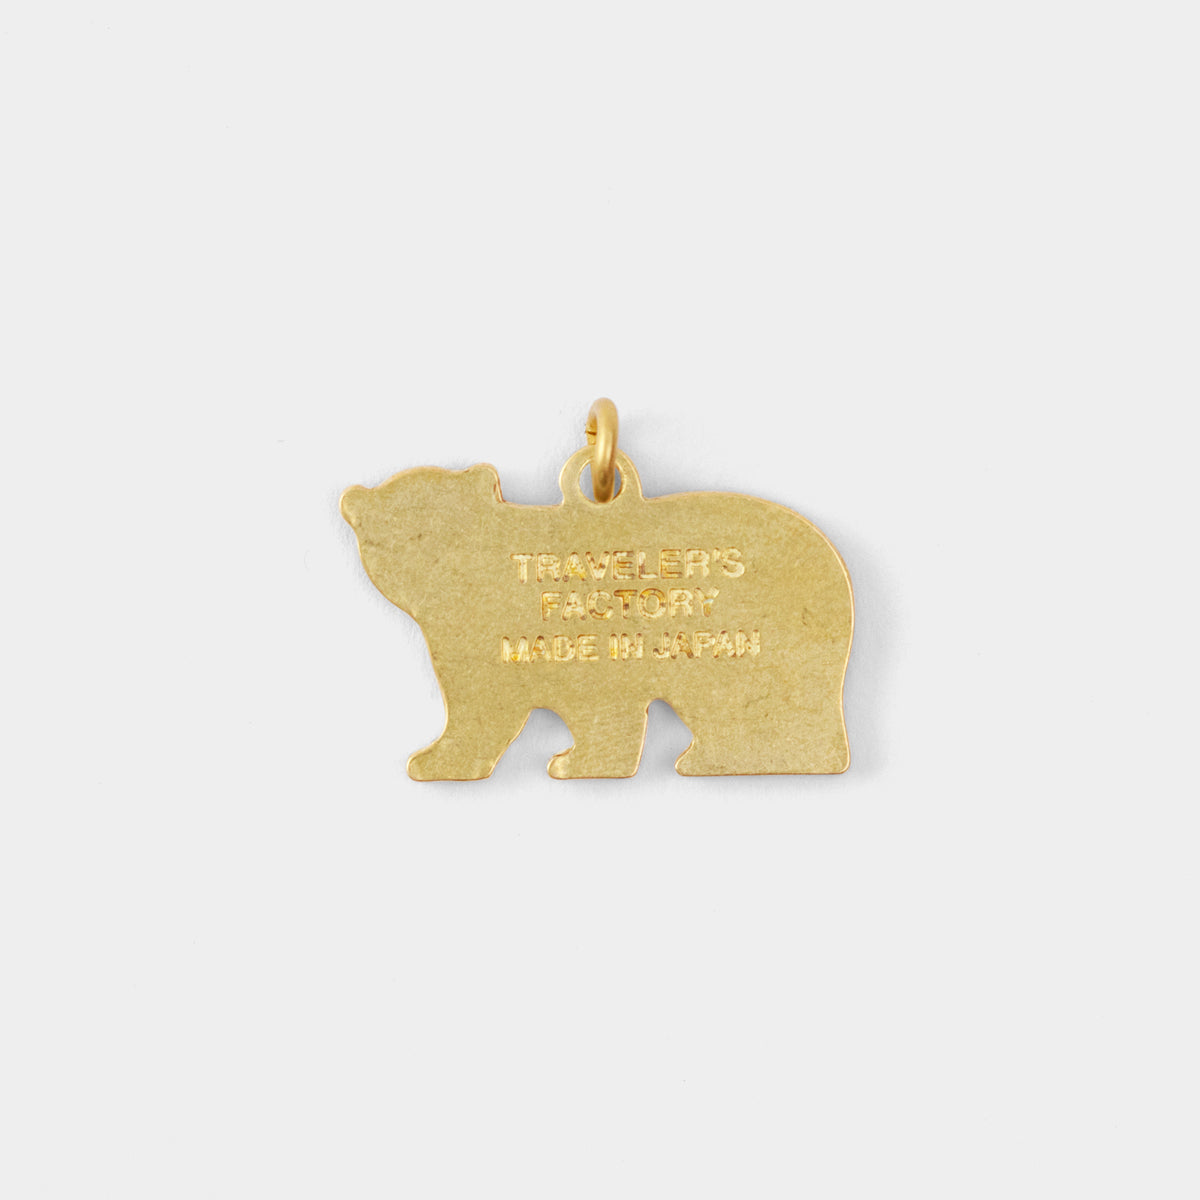 Traveler's Company Japan Accessories TRAVELER'S Factory Brass Charm - Little Bear